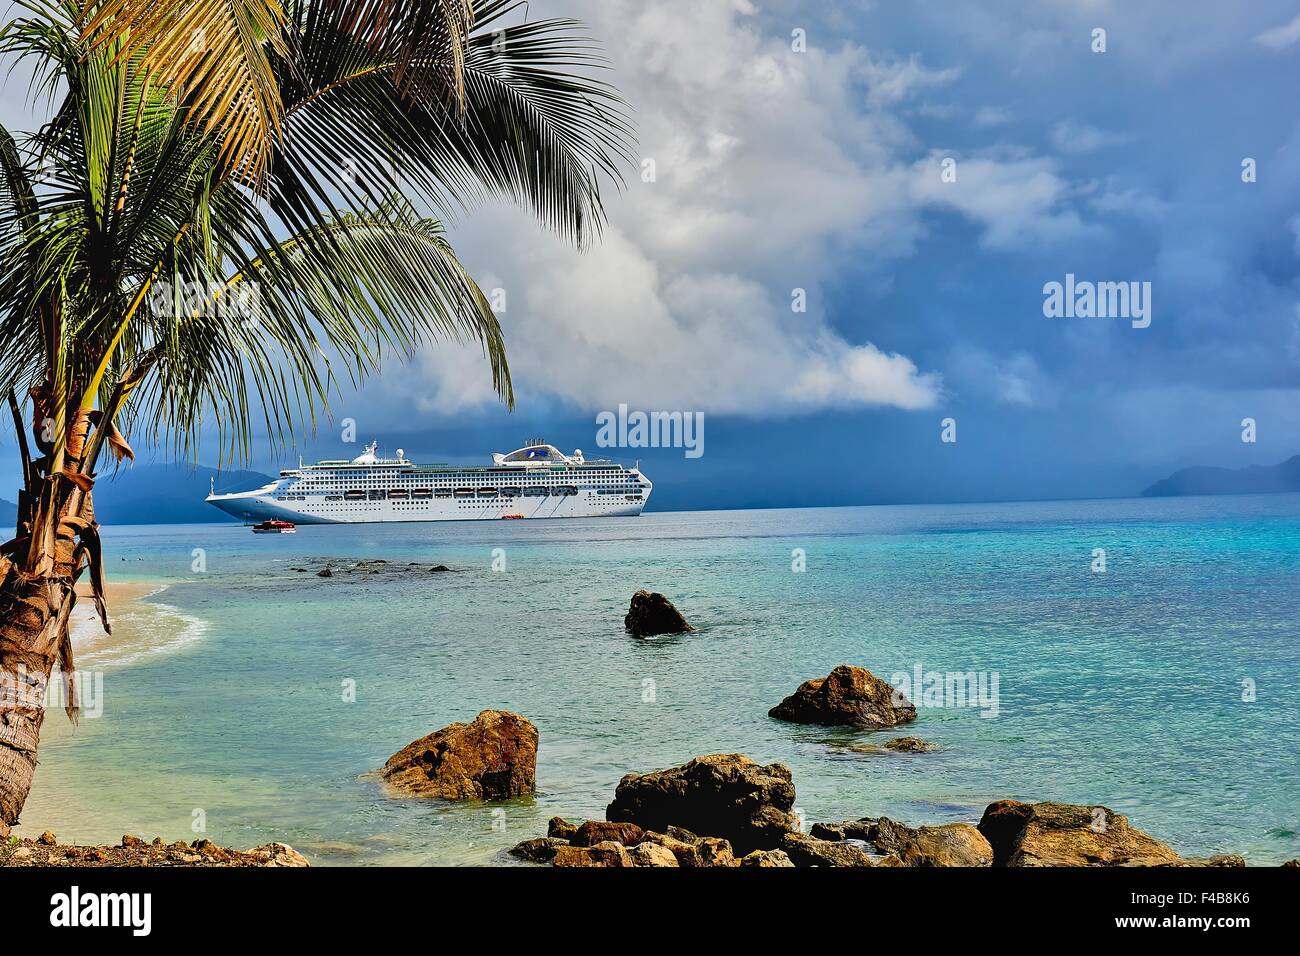 Doini Island PNG Papua New Guinea Bay Beach Sun Princess Cruise Liner Stock Photo